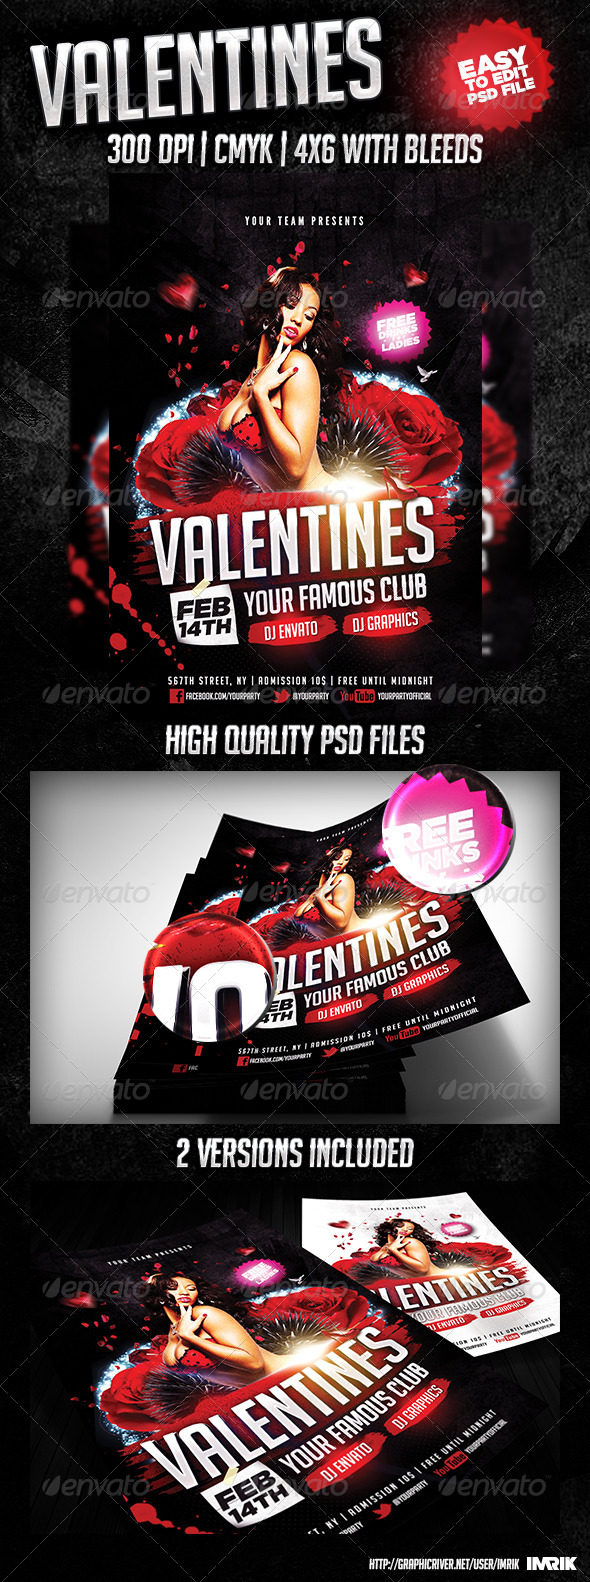 Valentines Flyer 2014